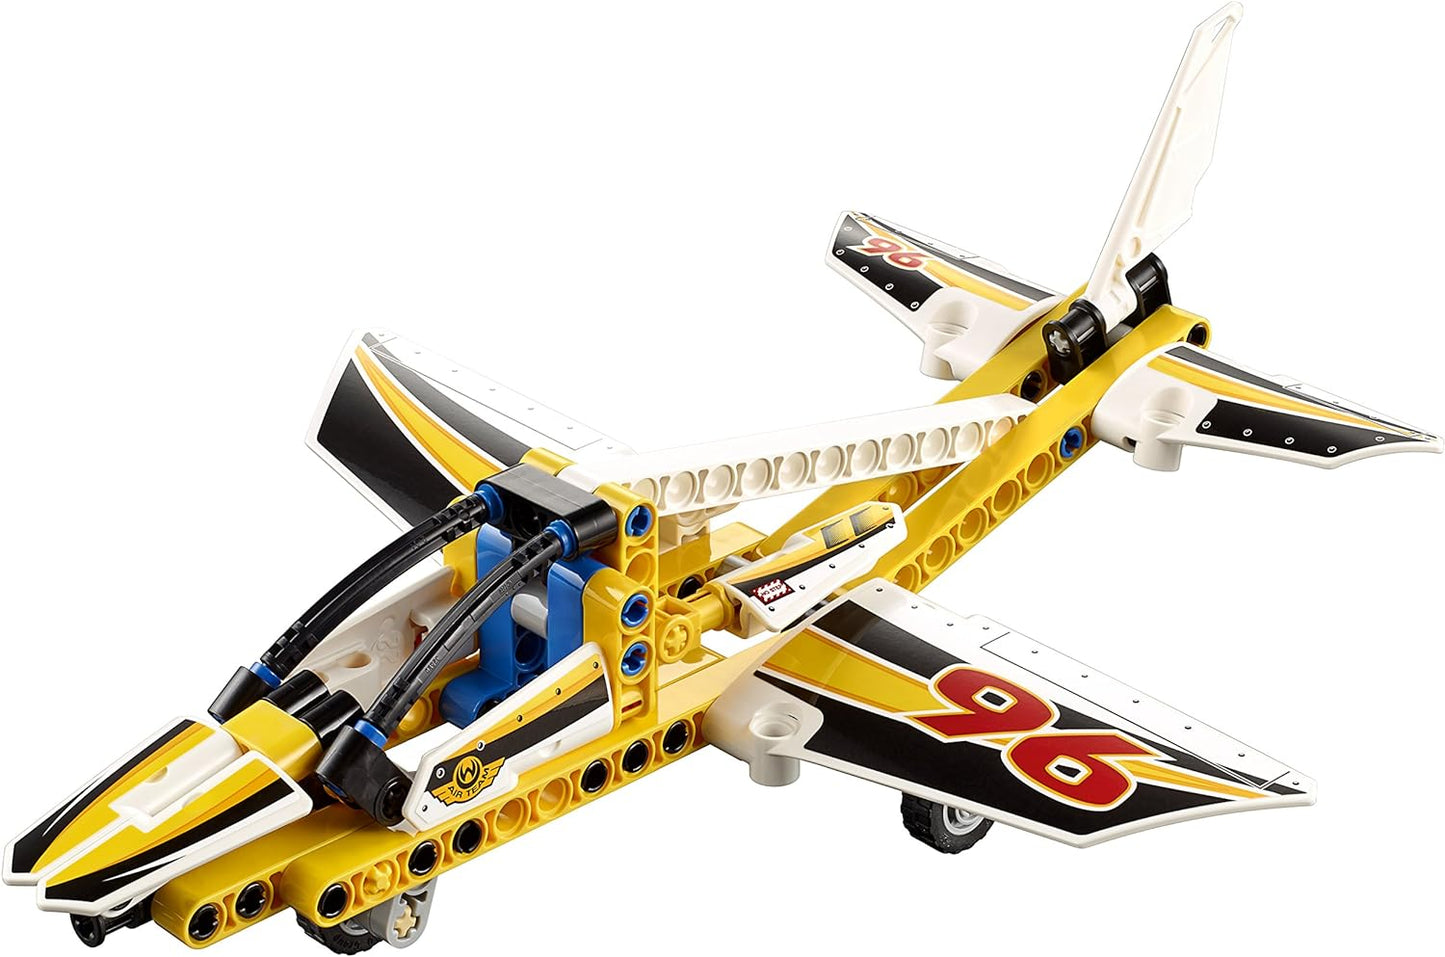 LEGO TECHNIC Display Team Jet 42044 Building Kit